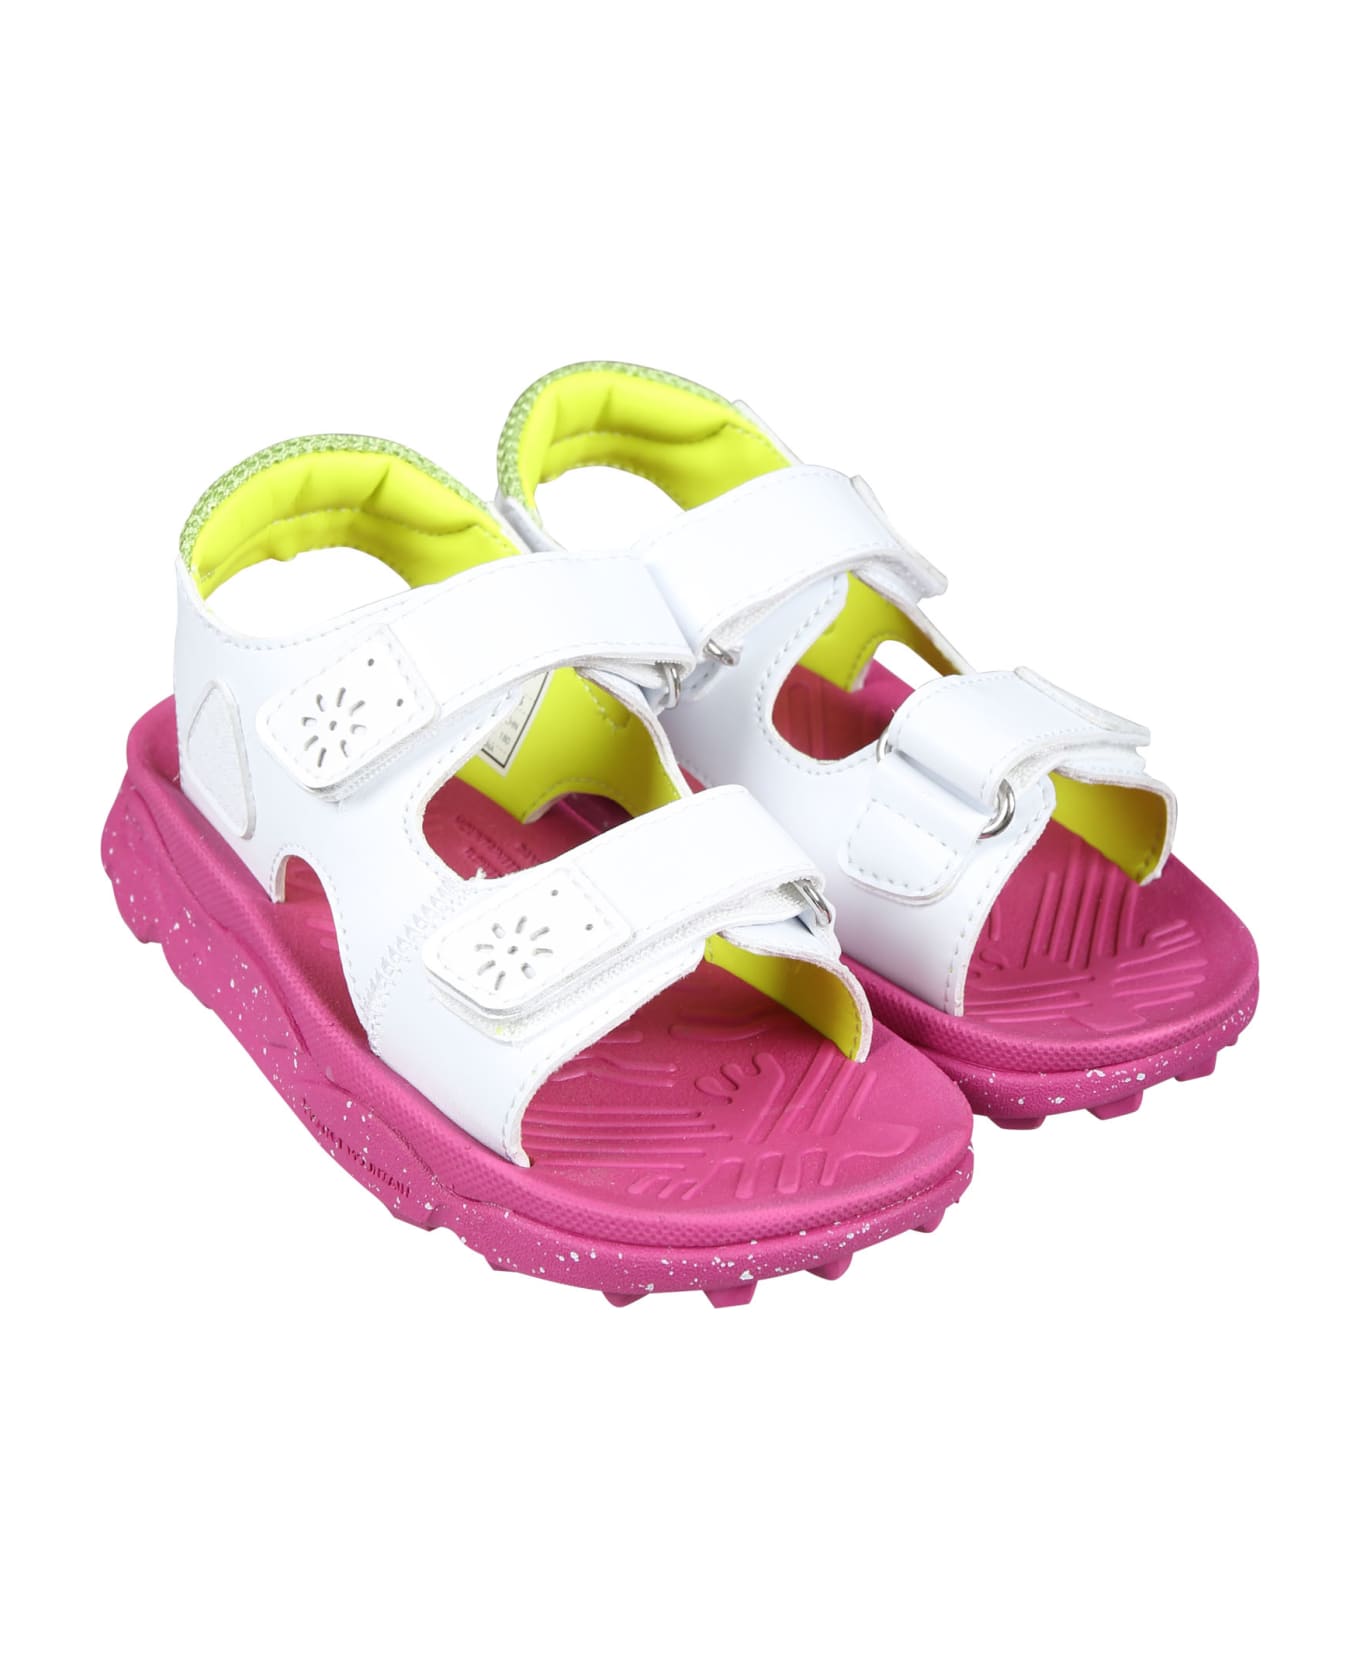 Flower Mountain White Gaho Sandals For Girl With Logo - White